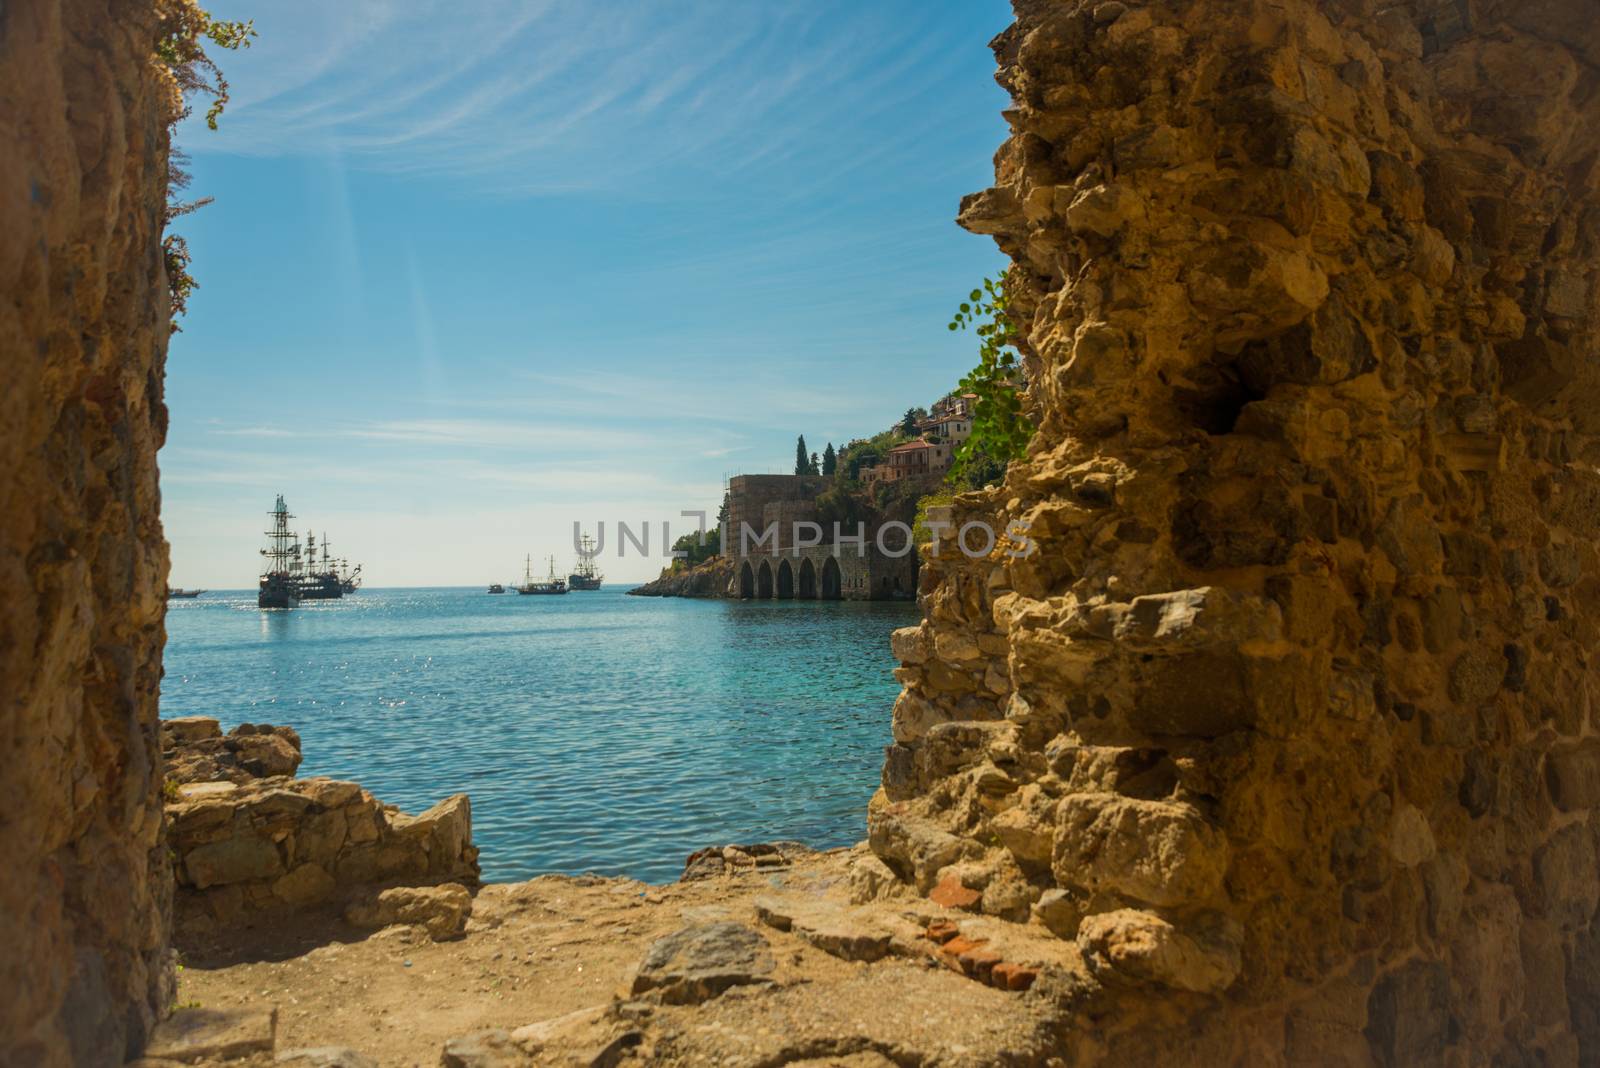 Shipyard Tersane, Alanya historical dockyard. The building with arches on the inside. Ships sailing on the sea. Alanya peninsula, Antalya district, Turkey, Asia